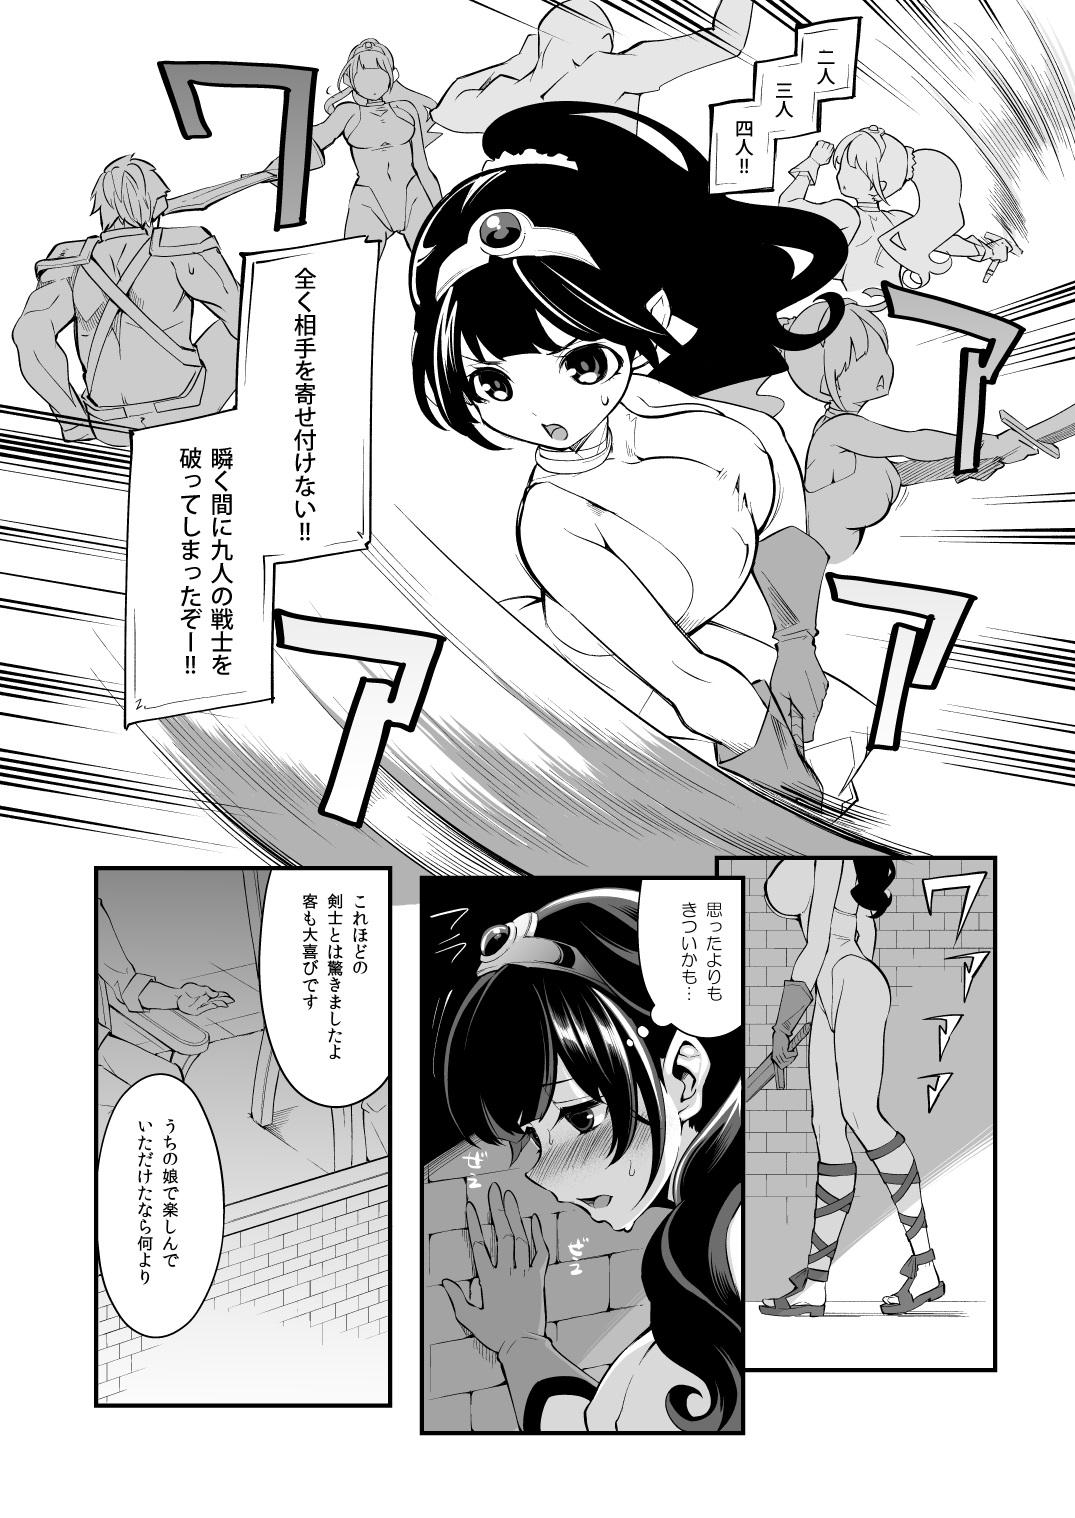 Romance Benmusu Bouken no Sho 9 - Dragon quest iii Sexy - Page 7